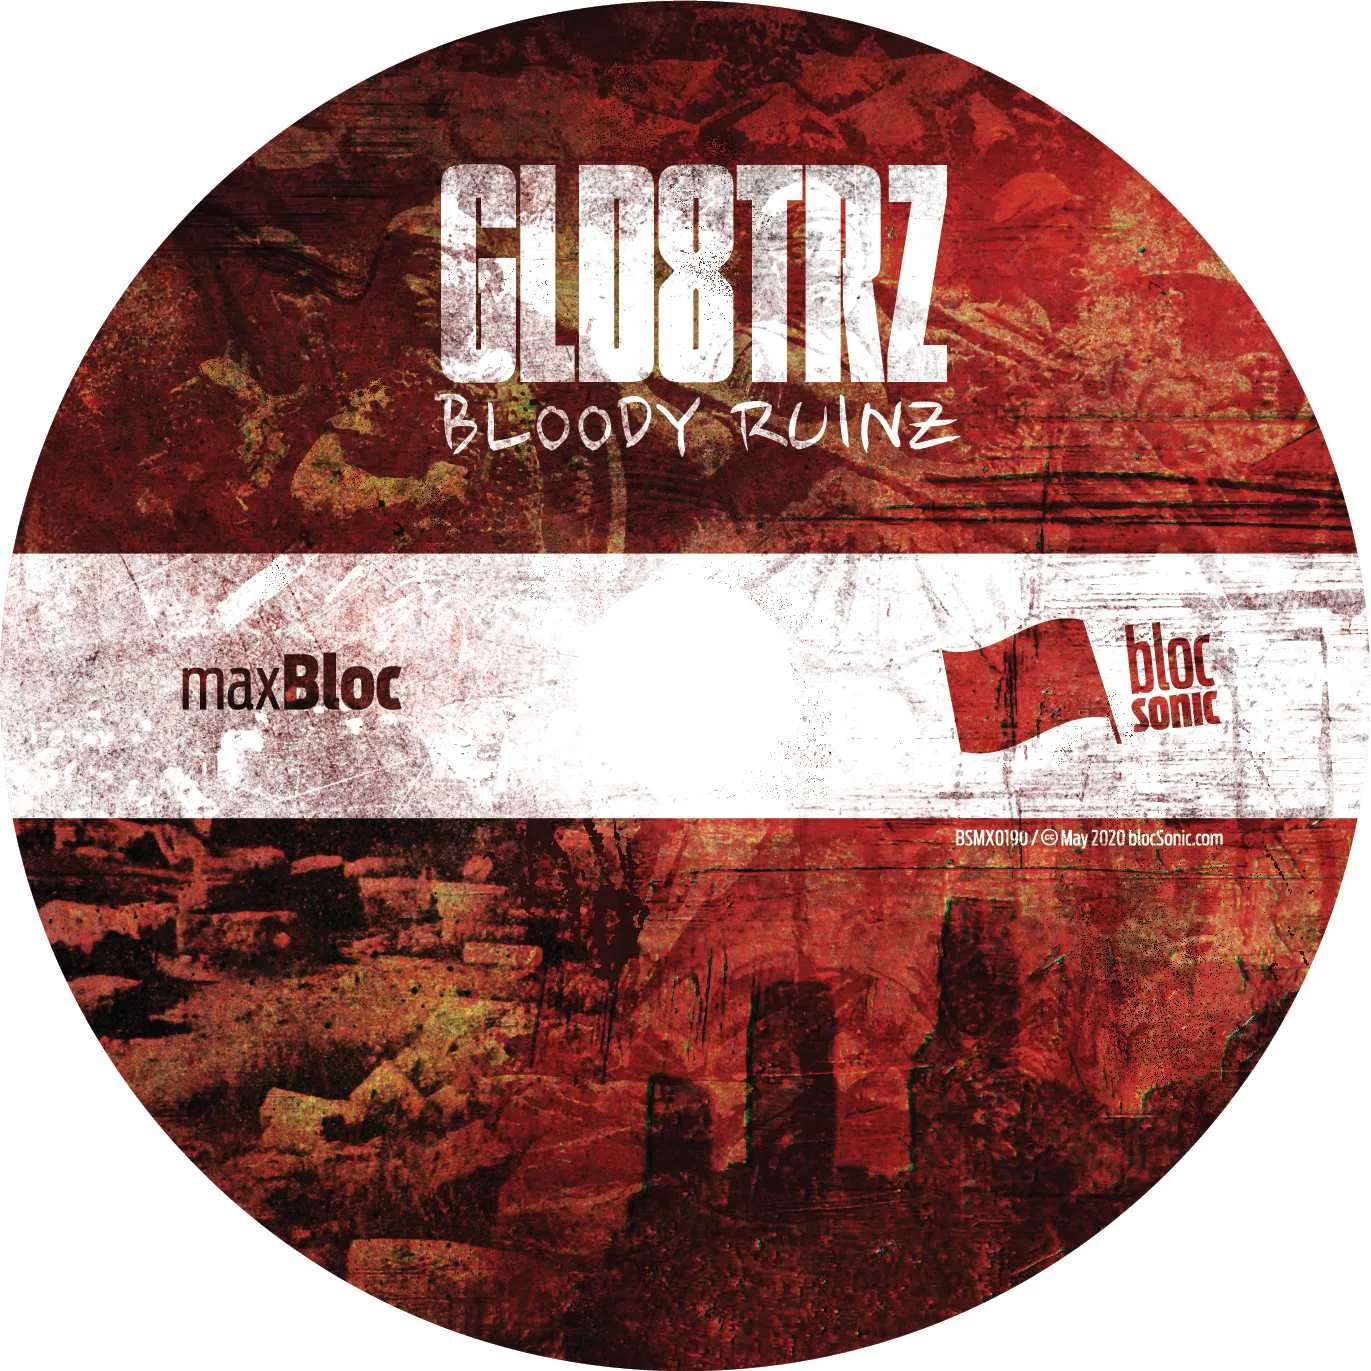 Album disc for “Bloody Ruinz” by GLD8TRZ